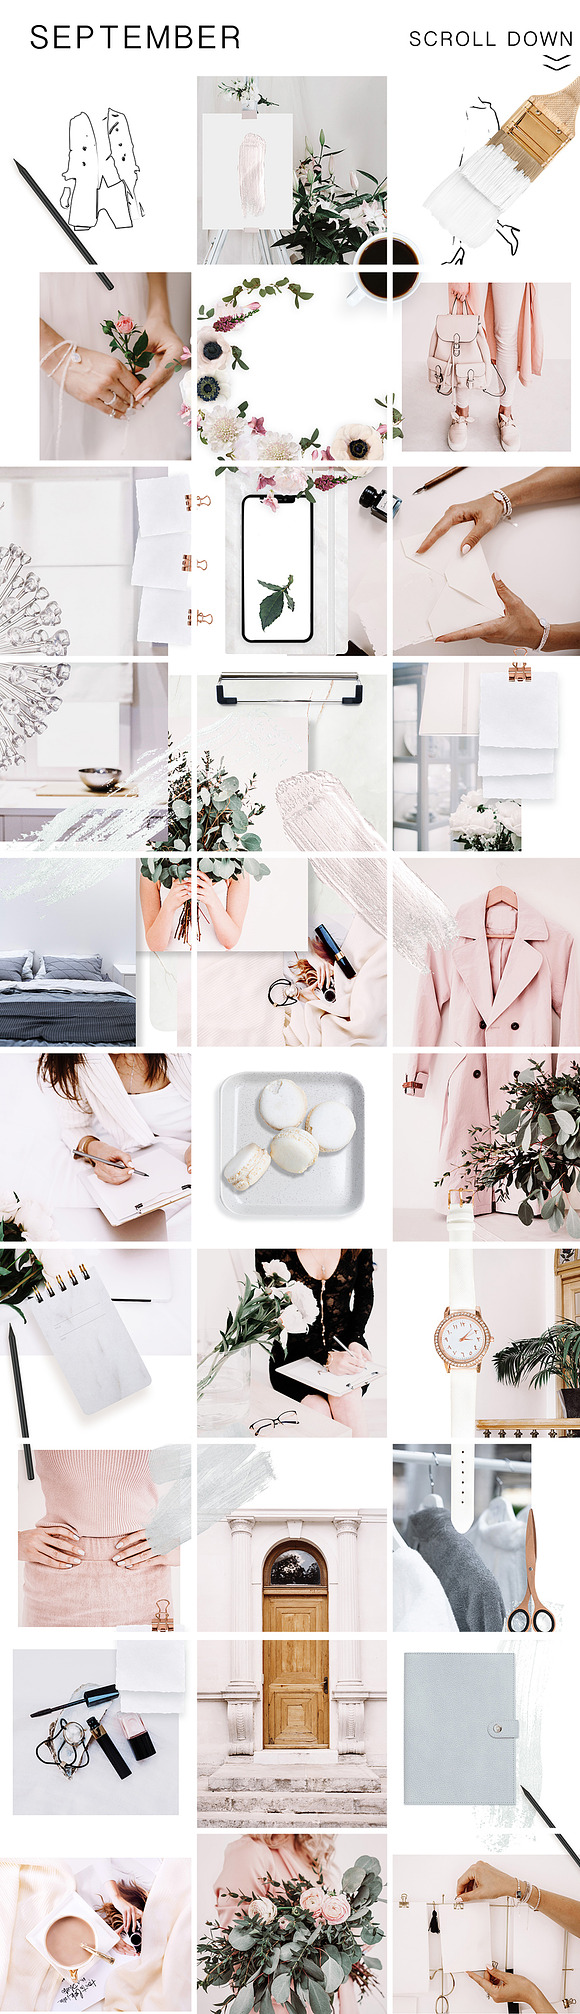 PHOTOS $ PUZZLE. MEGA BUNDLE. in Instagram Templates - product preview 9